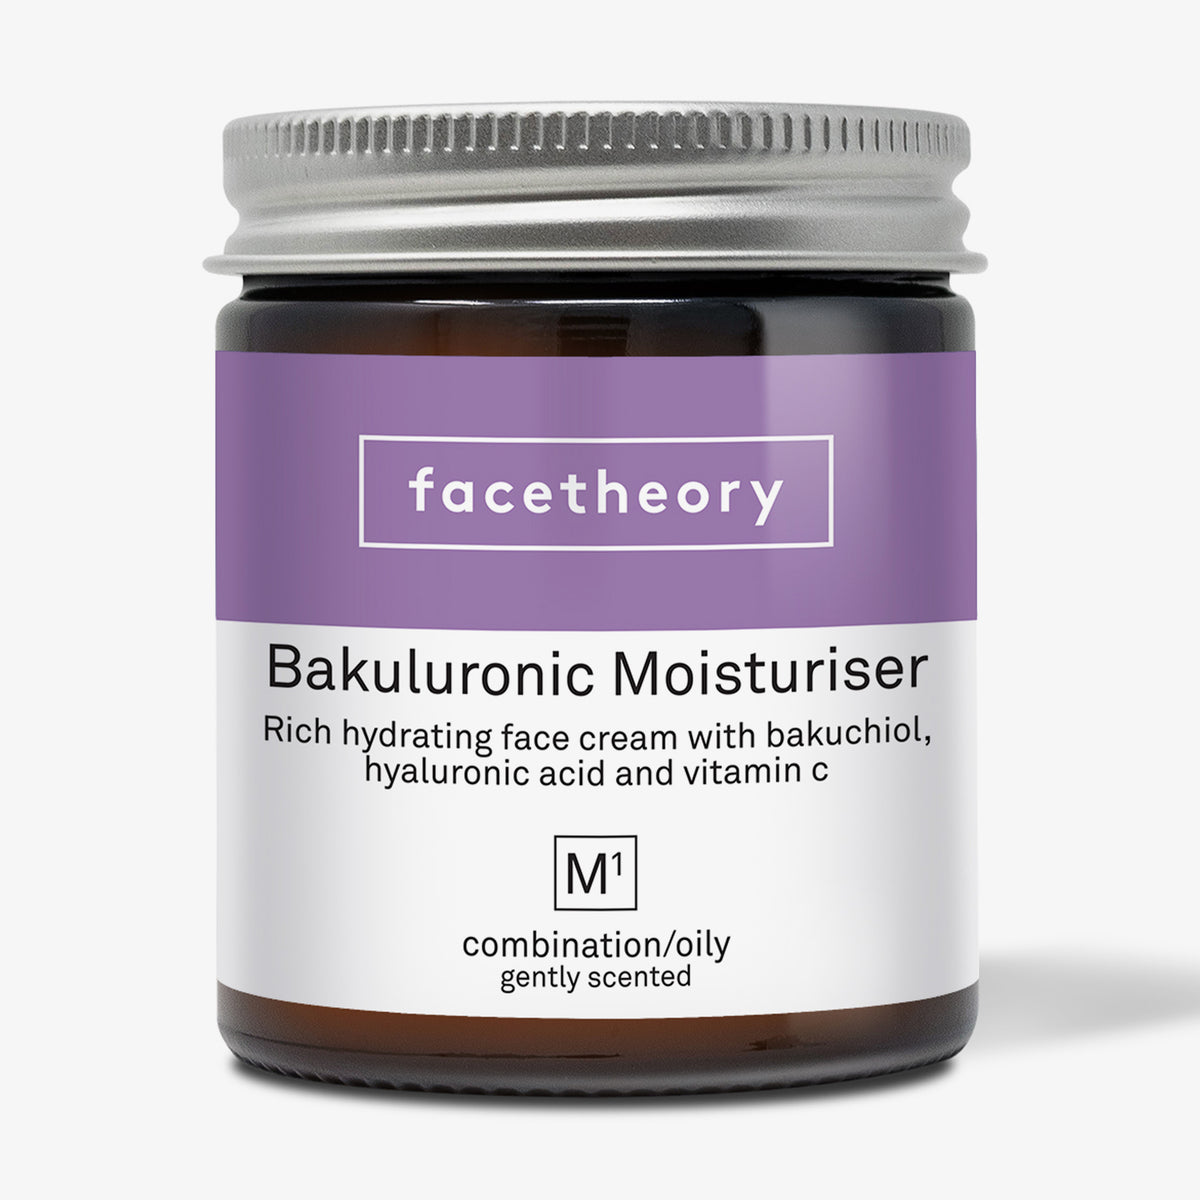 facetheory | Bakuluronic Moisturiser M1